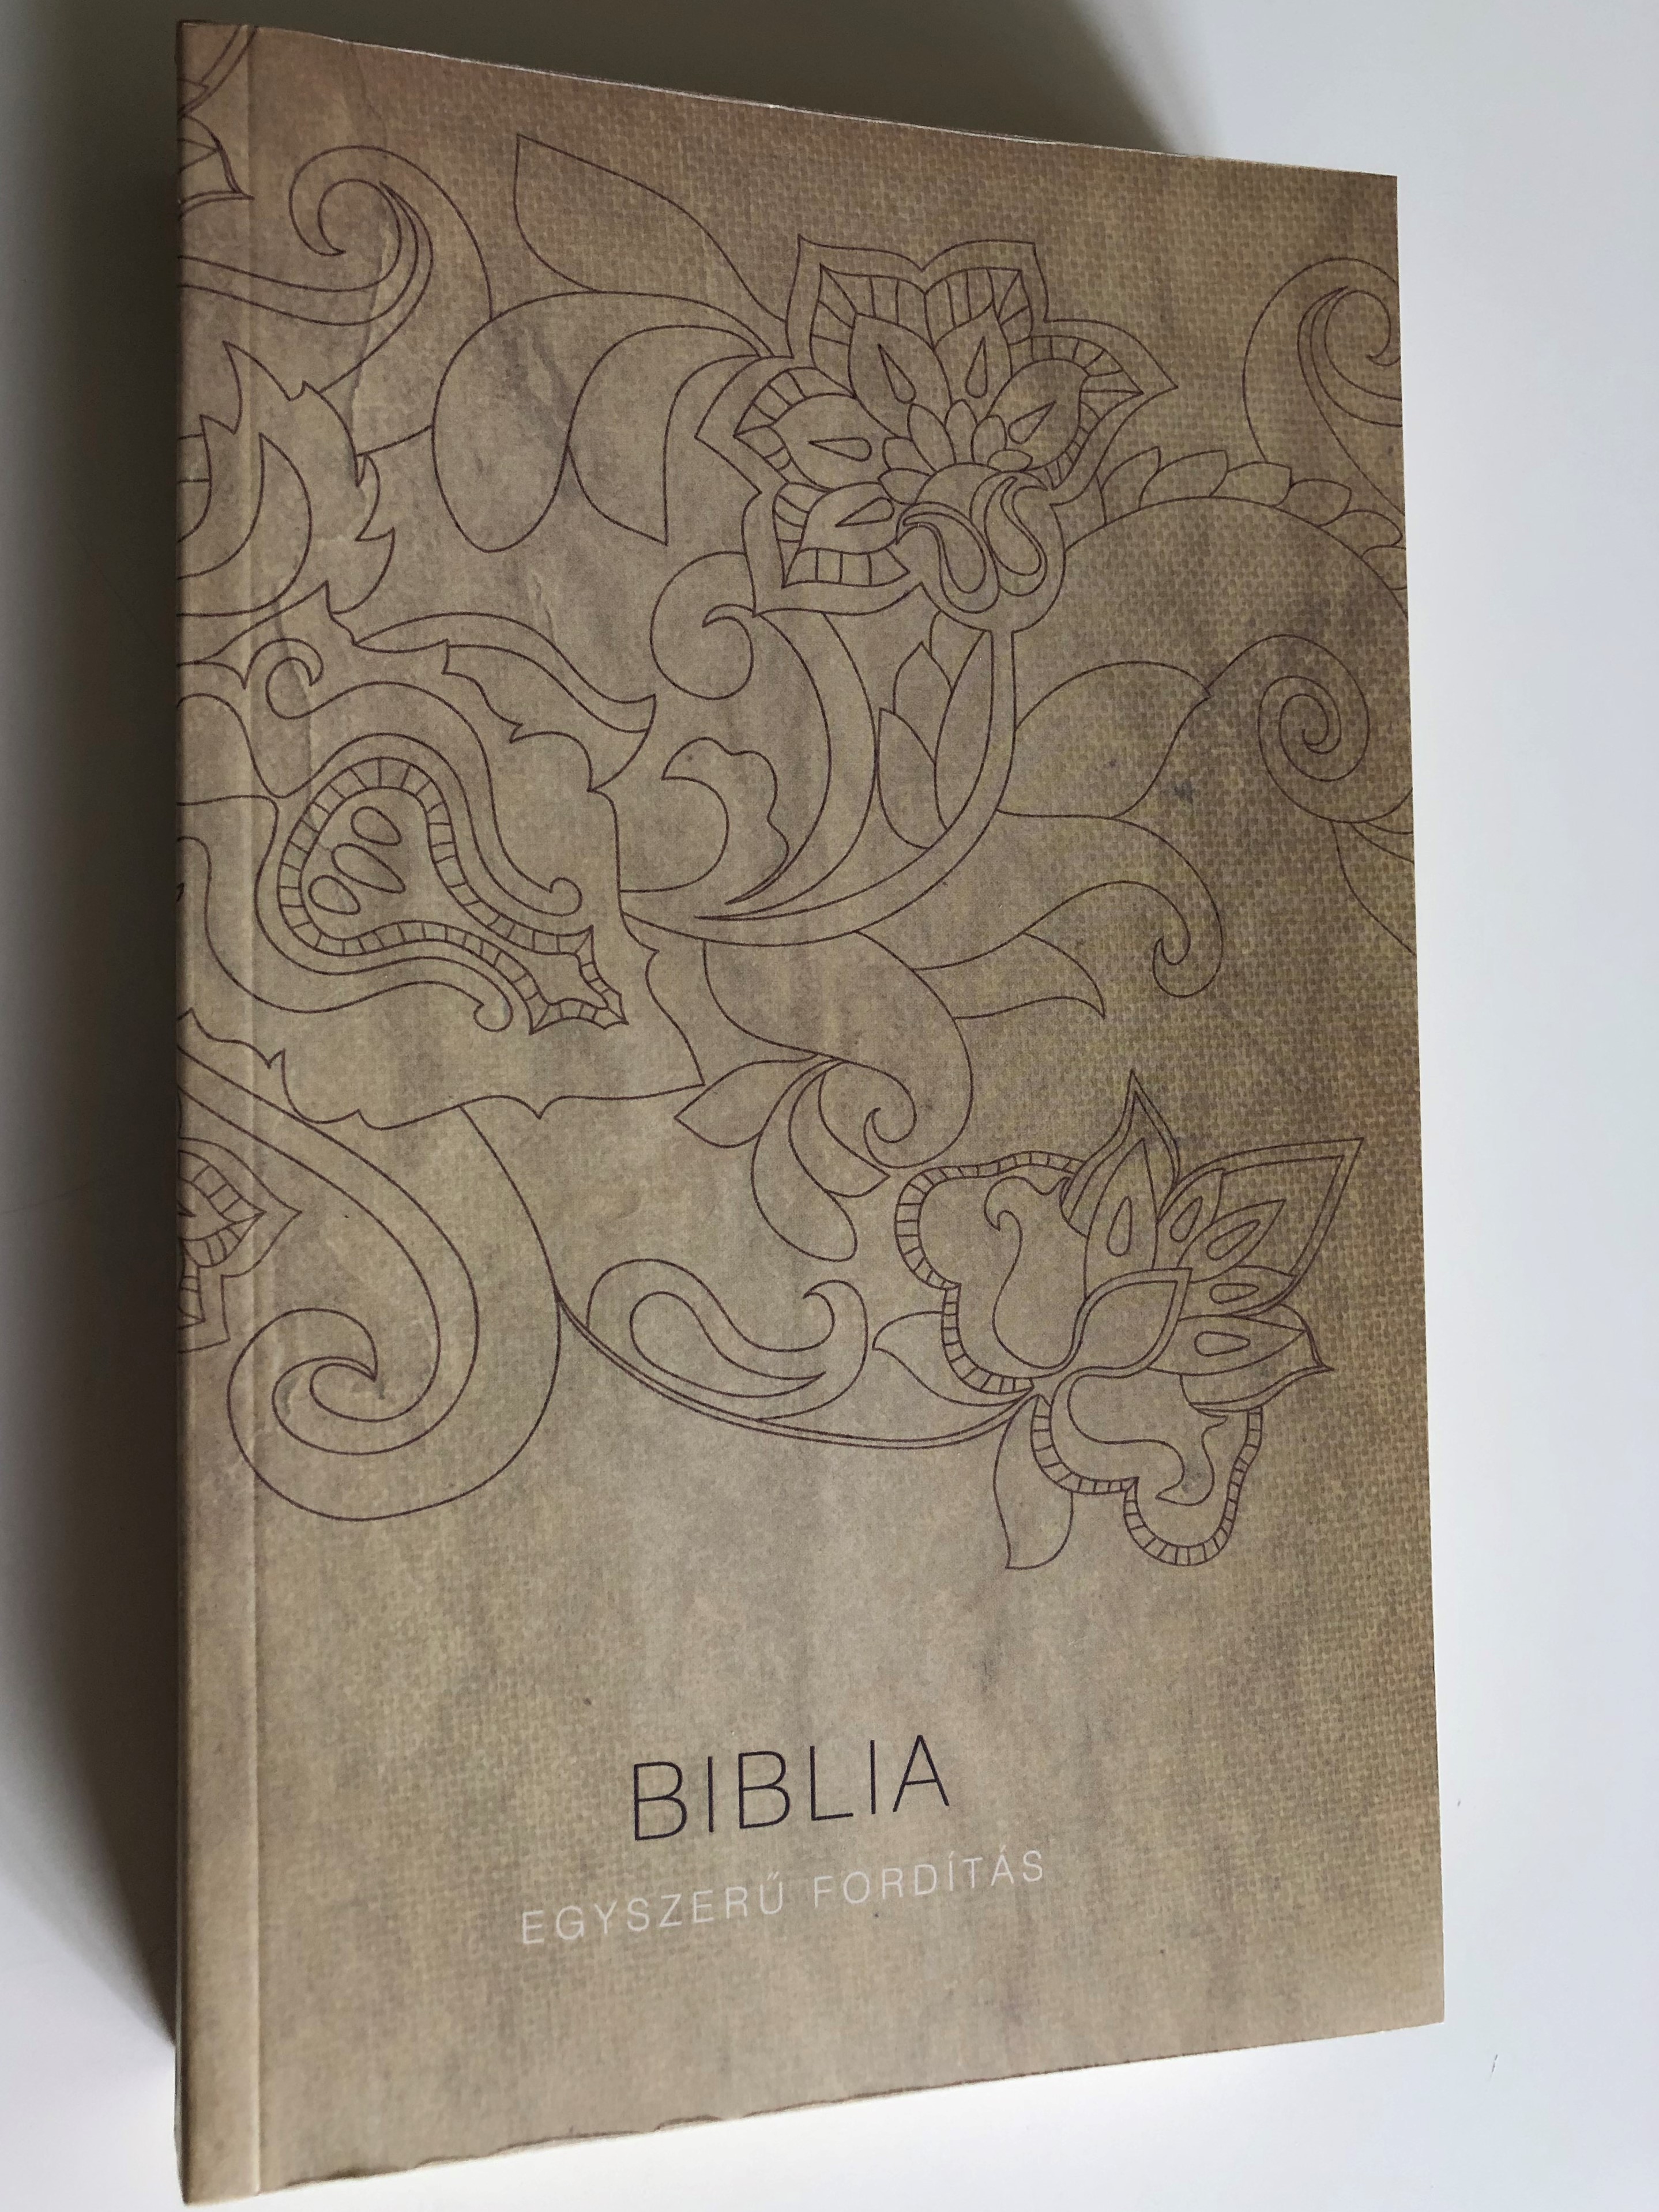 hungarian-bible-easy-to-read-version-antic-cover-magyar-szent-biblia-egyszer-fordit-s-efo-biblia-paperback-2012-bible-league-international-1-.jpg